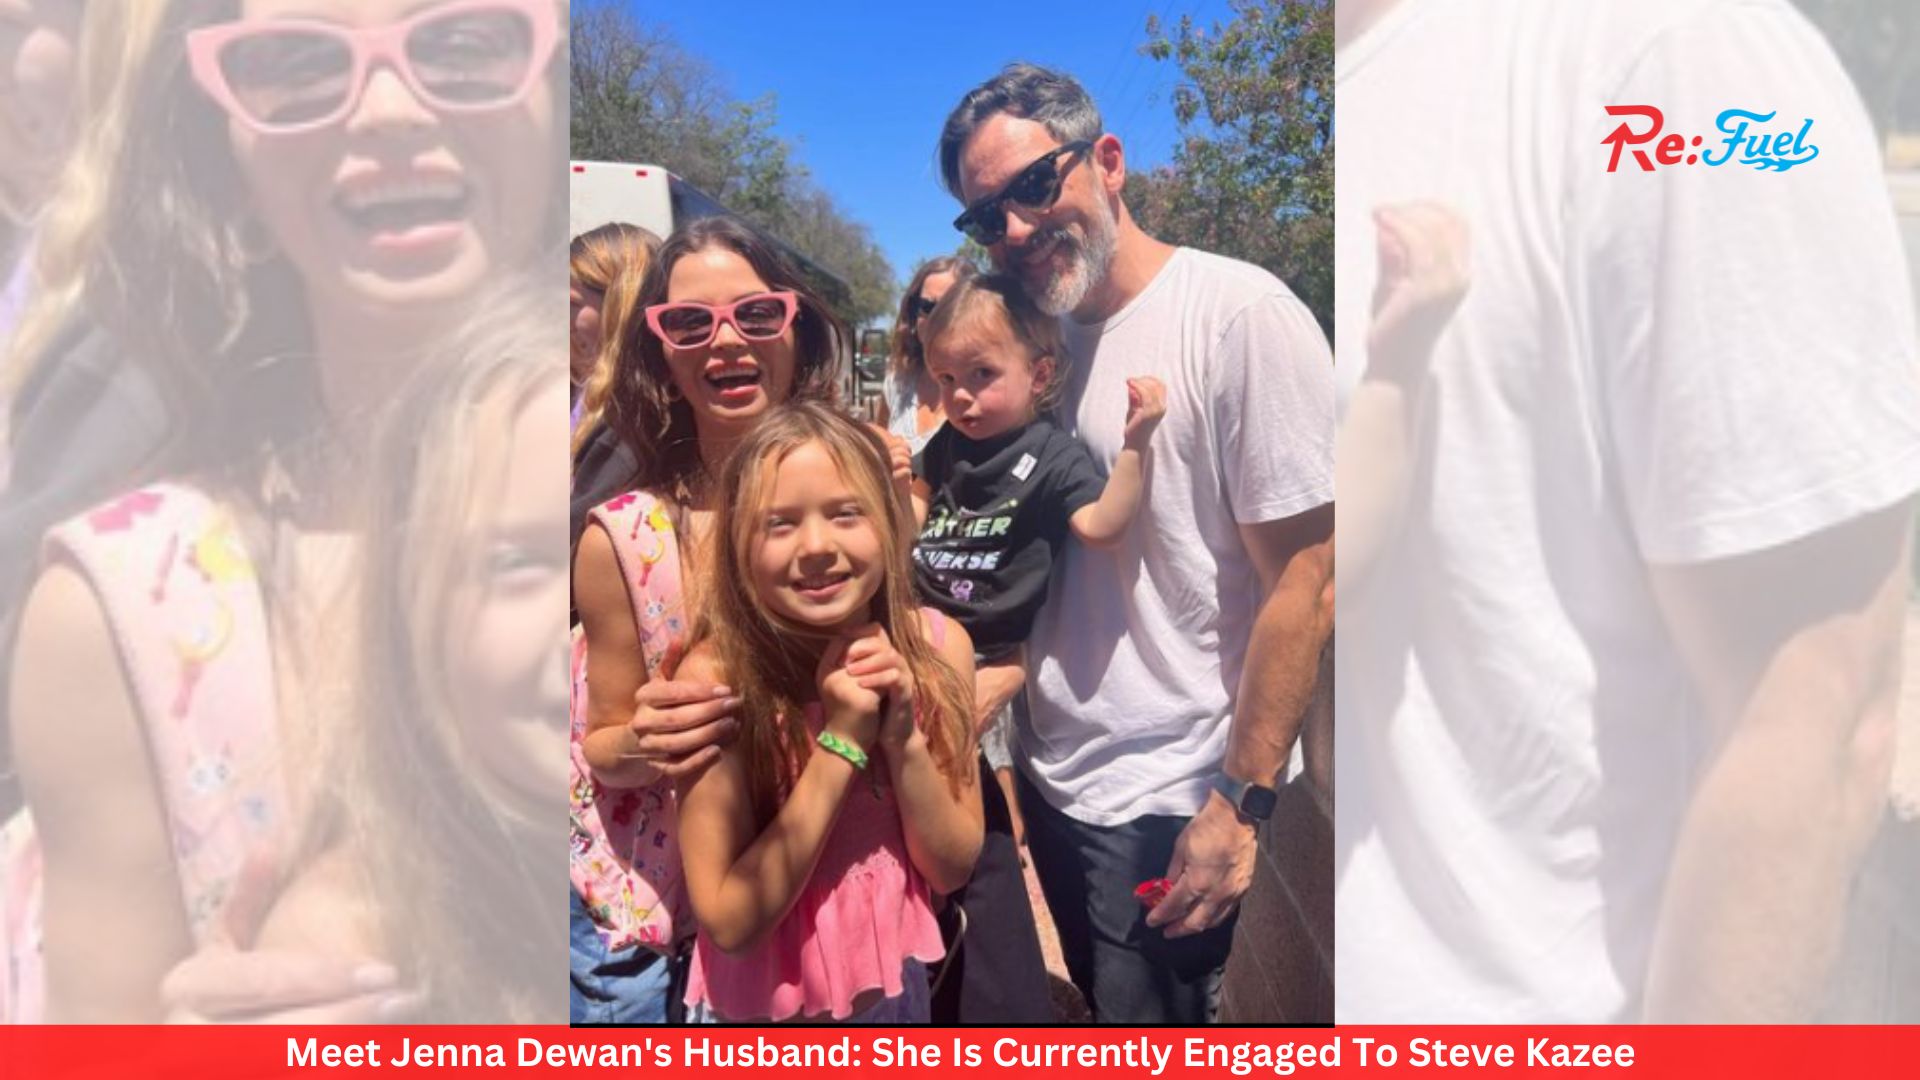 Meet Jenna Dewan's Husband: She Is Currently Engaged To Steve Kazee